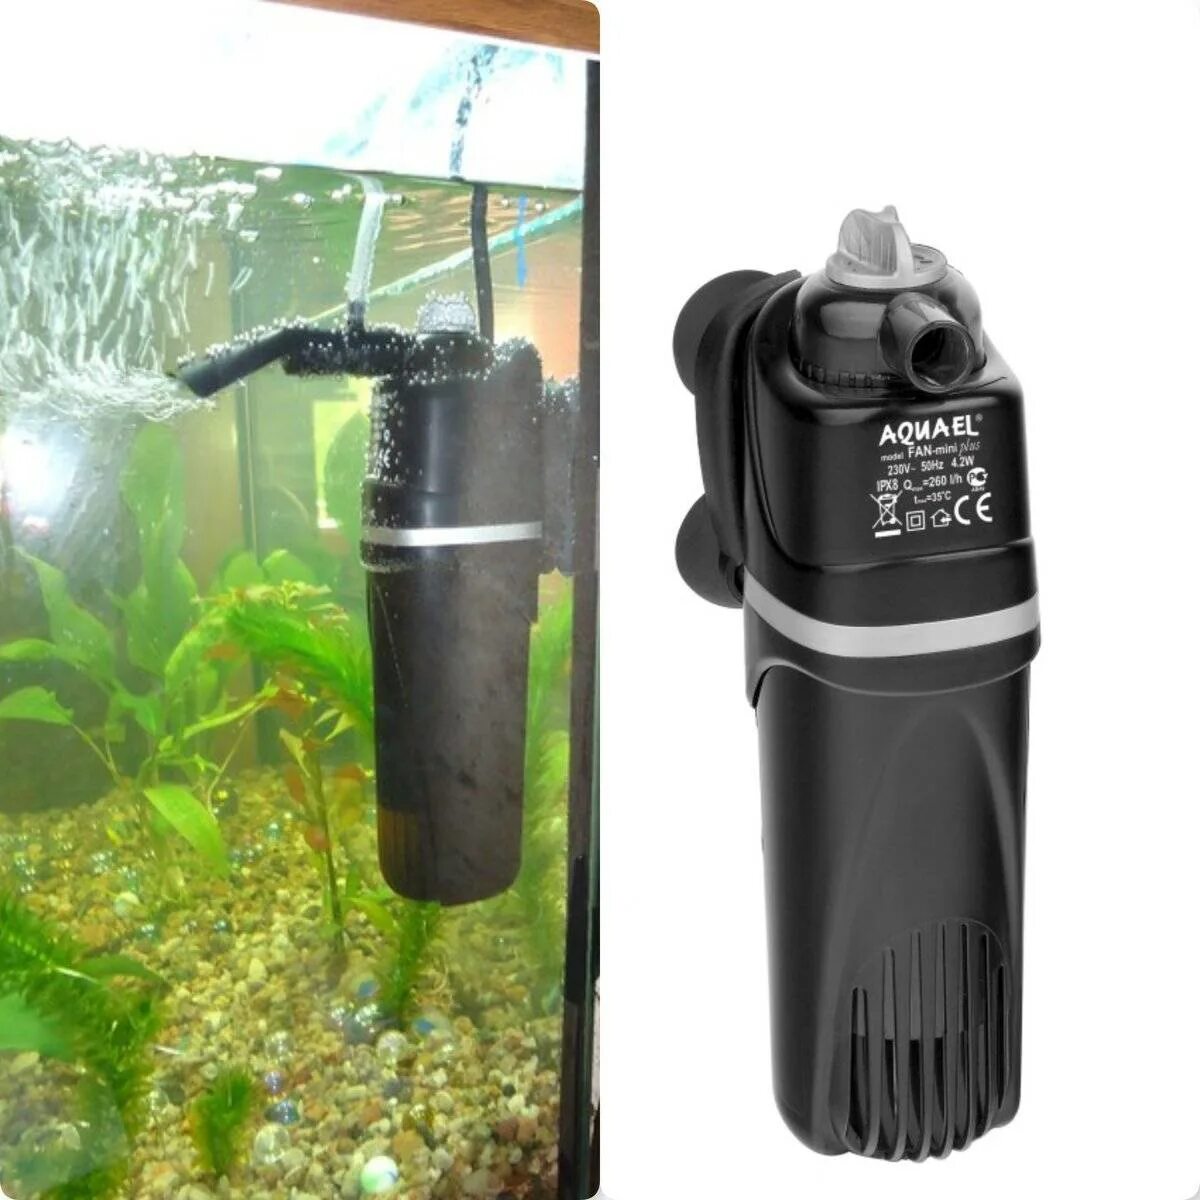 Внешний фильтр Aquael для аквариума на 200 литров. Компрессор аквариумный акваэль. Фильтр аквариумный внешний dophh 700. Aquael Fan Mini Plus. Фильтр aquael fan mini